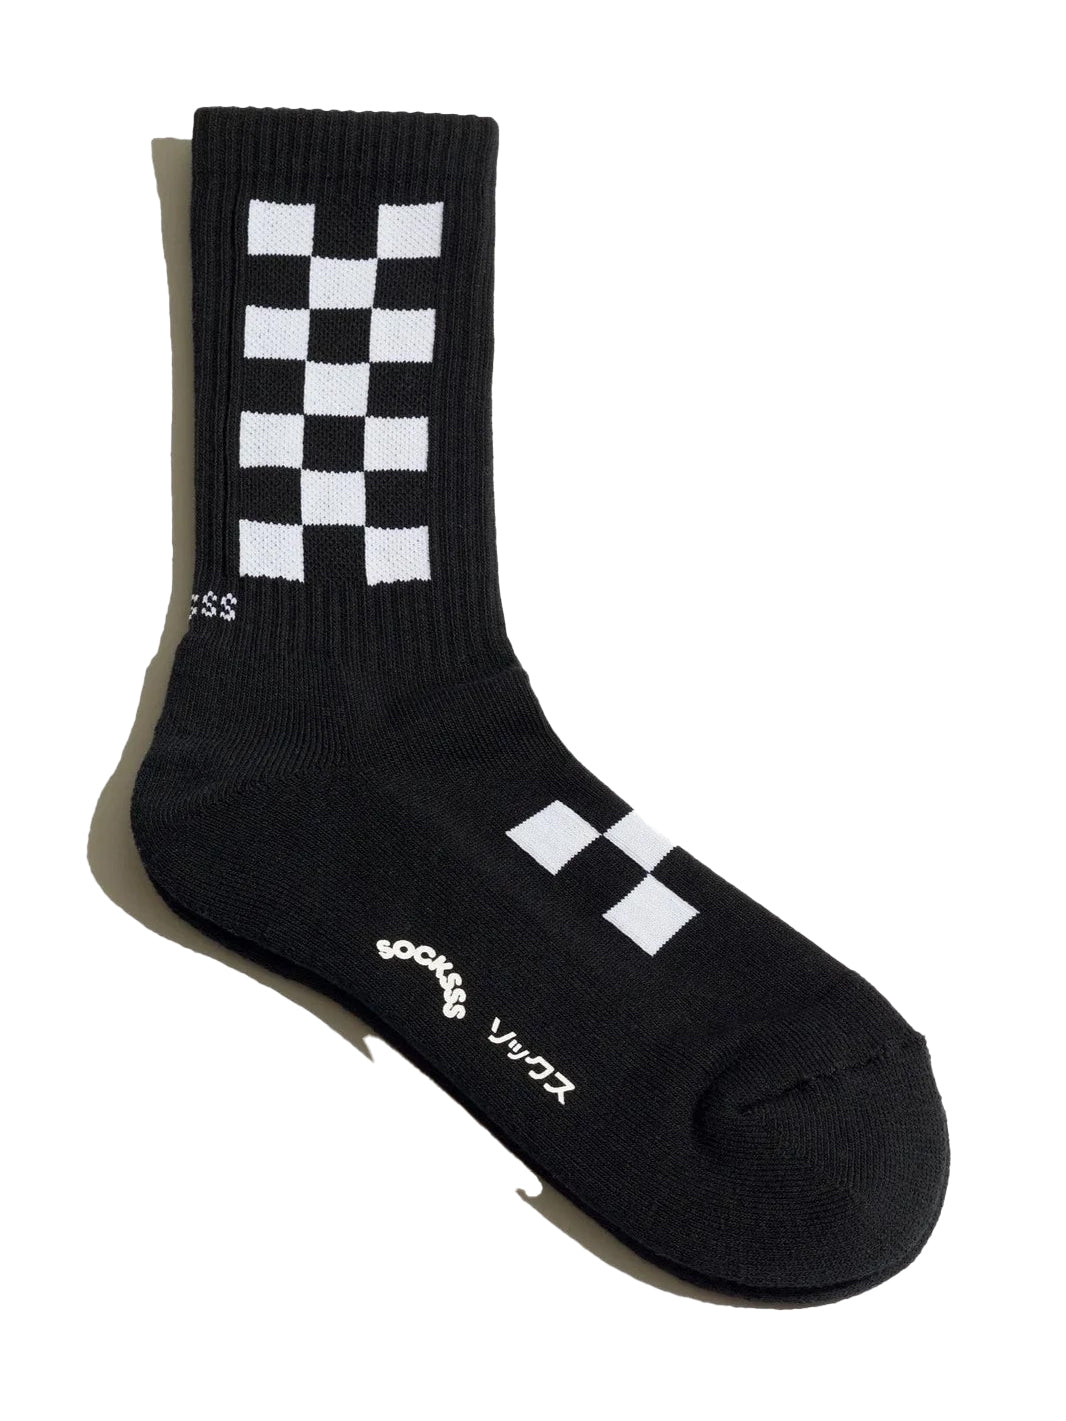 Aerodynamics socks, Made in Japan